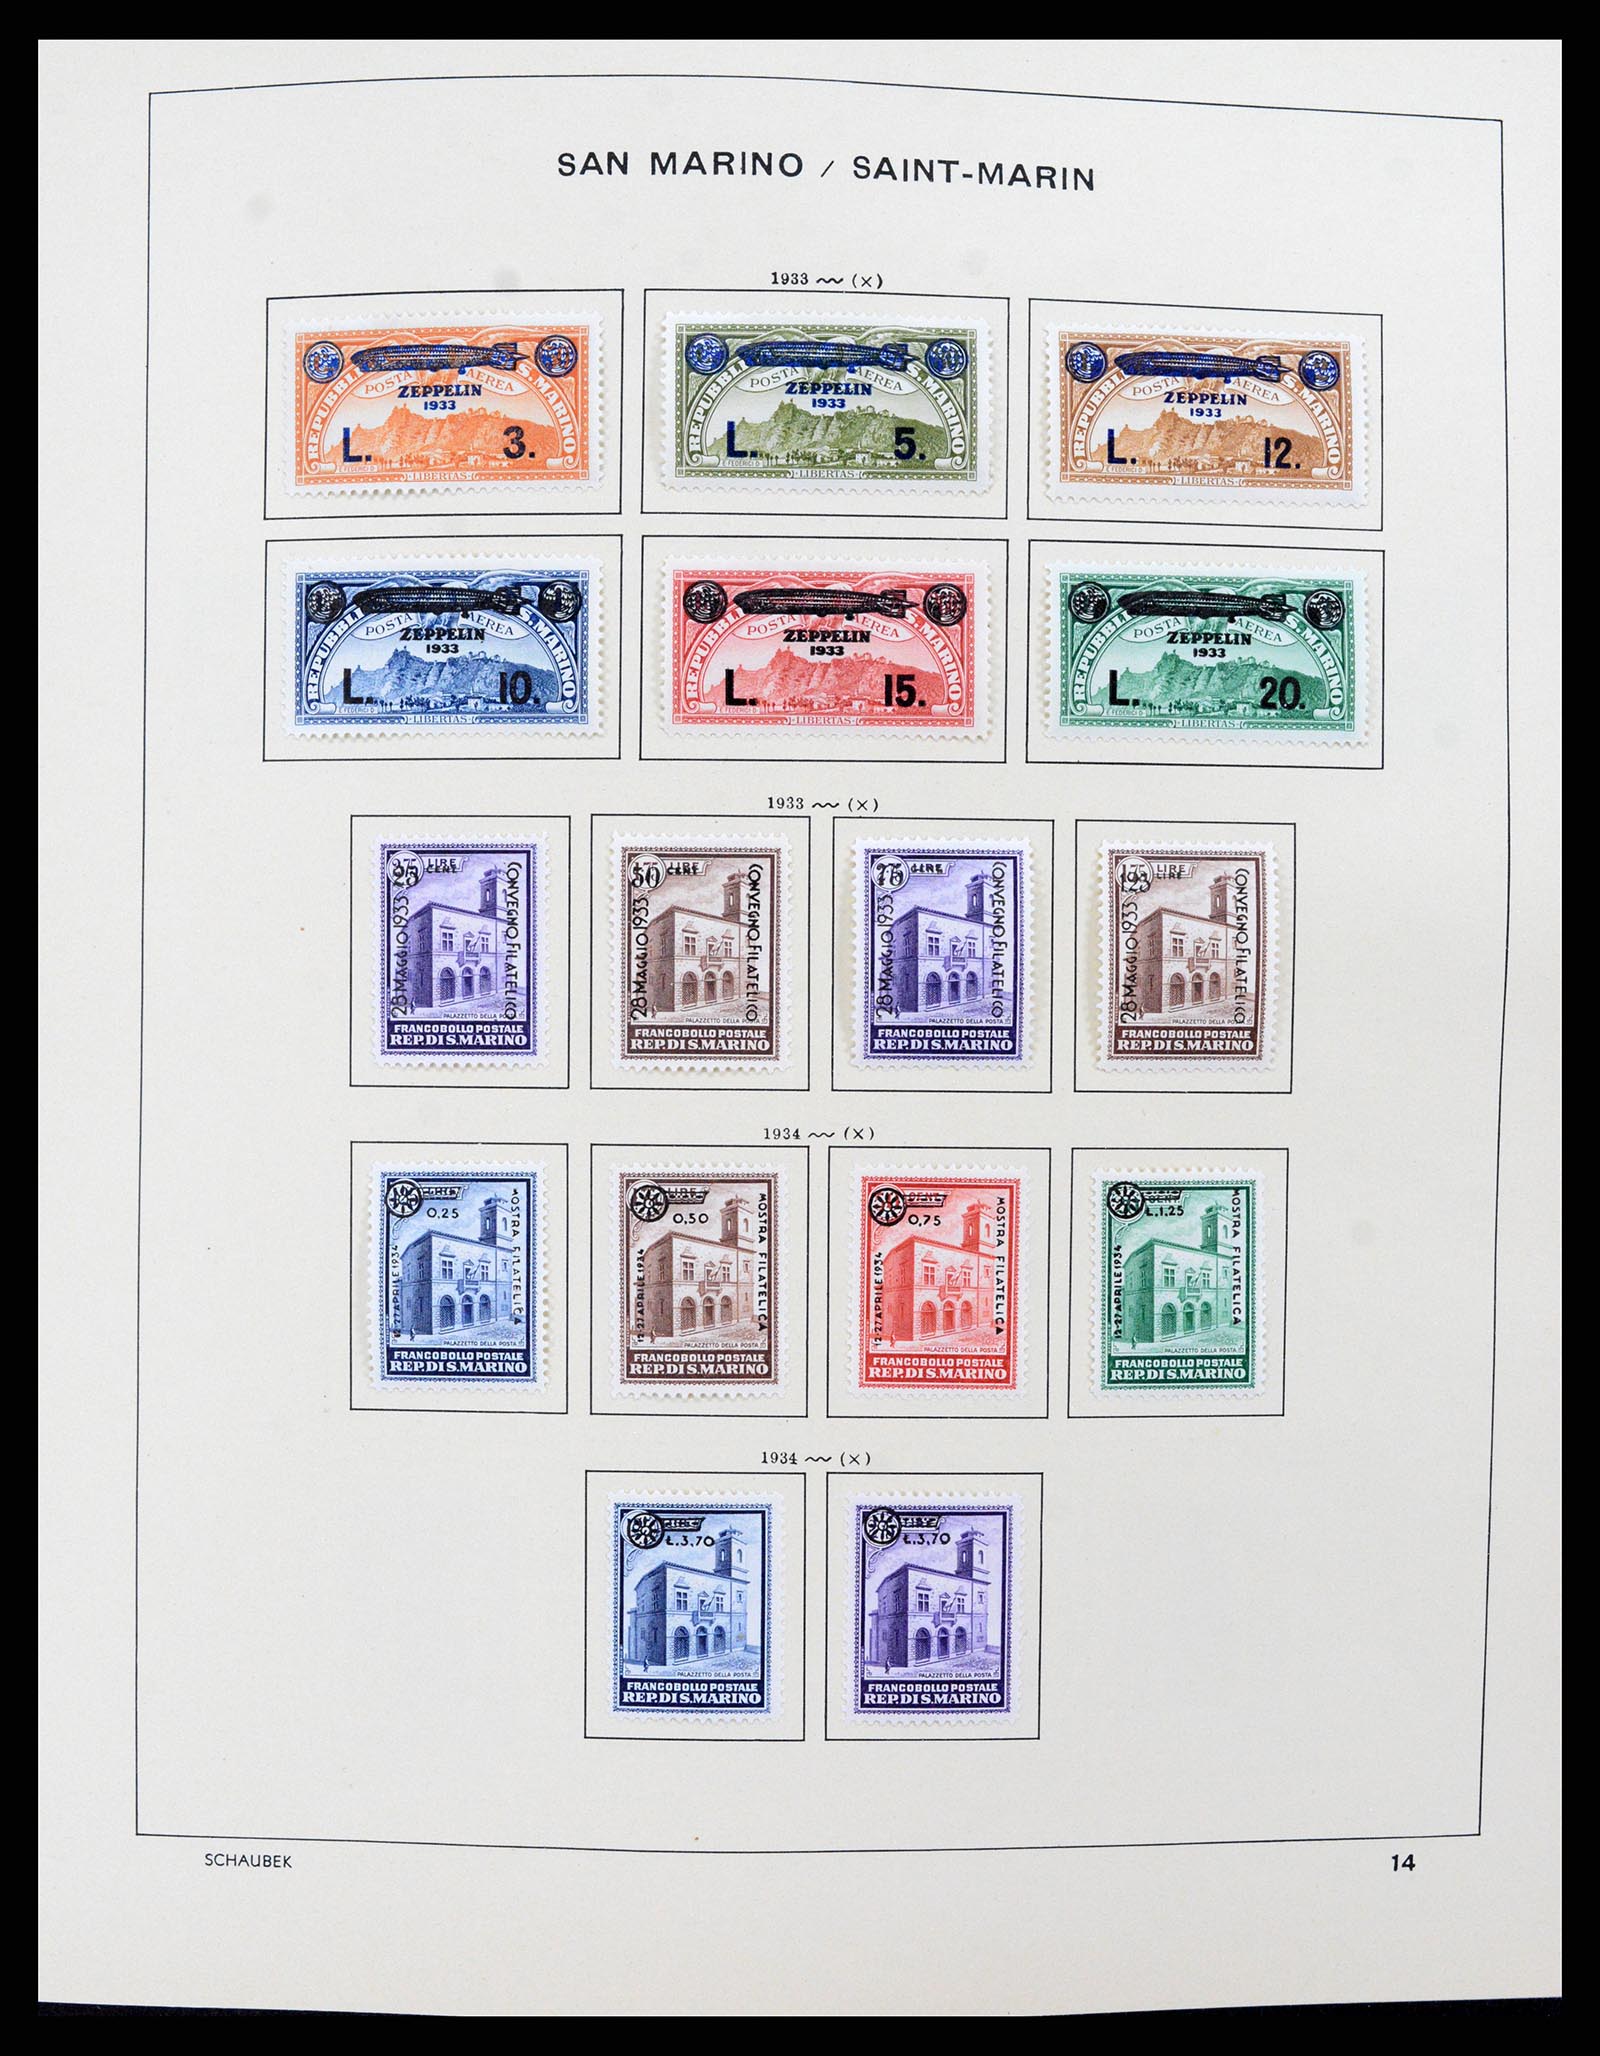 37556 011 - Stamp collection 37556 San Marino 1877-2017.